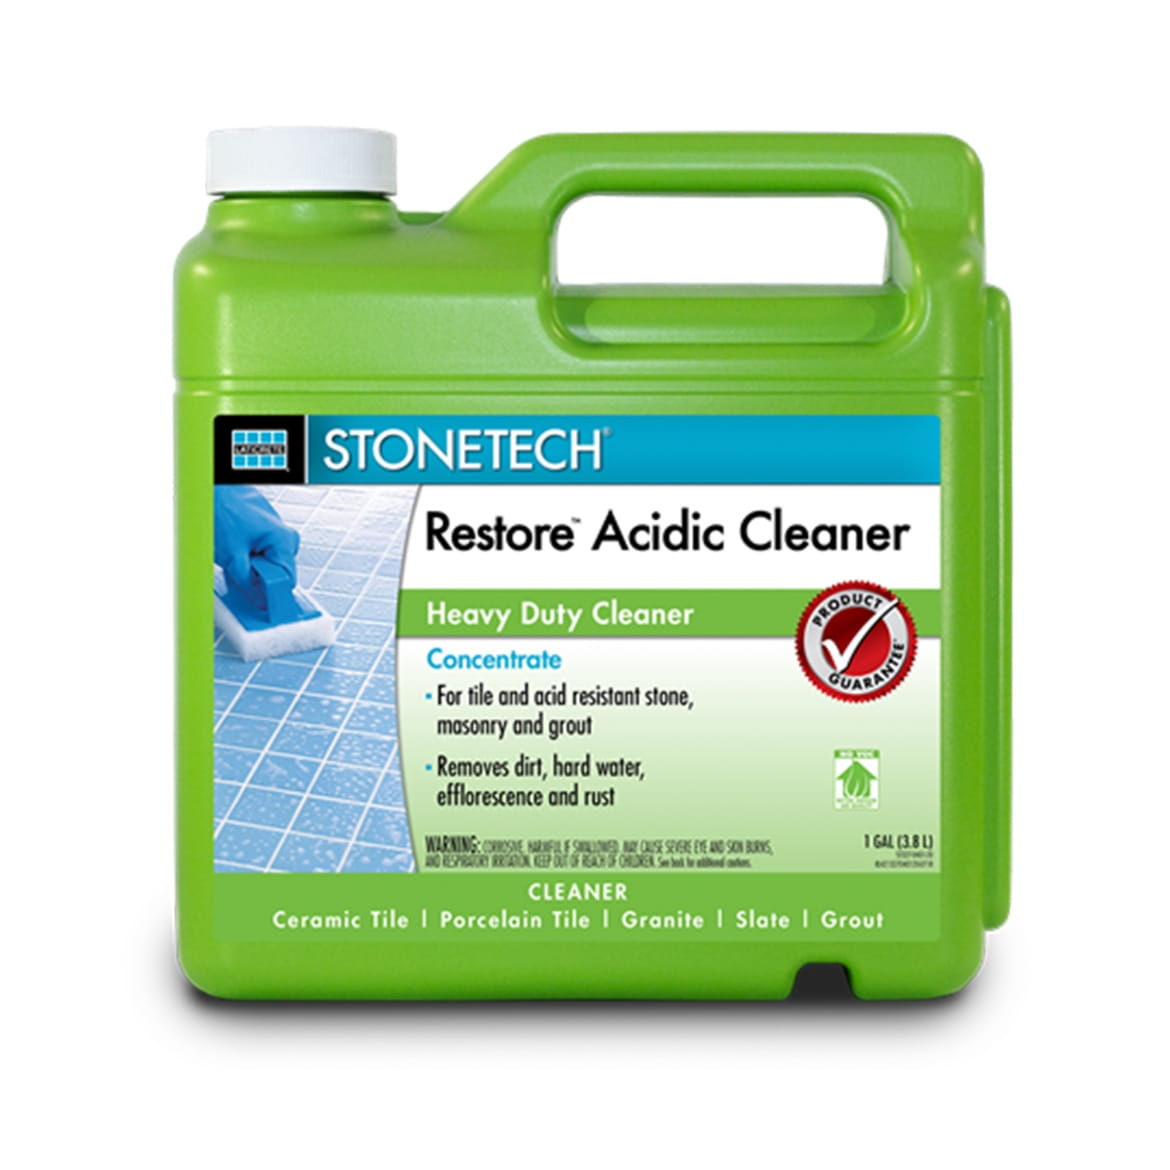 Stonetech restore acidic cleaner